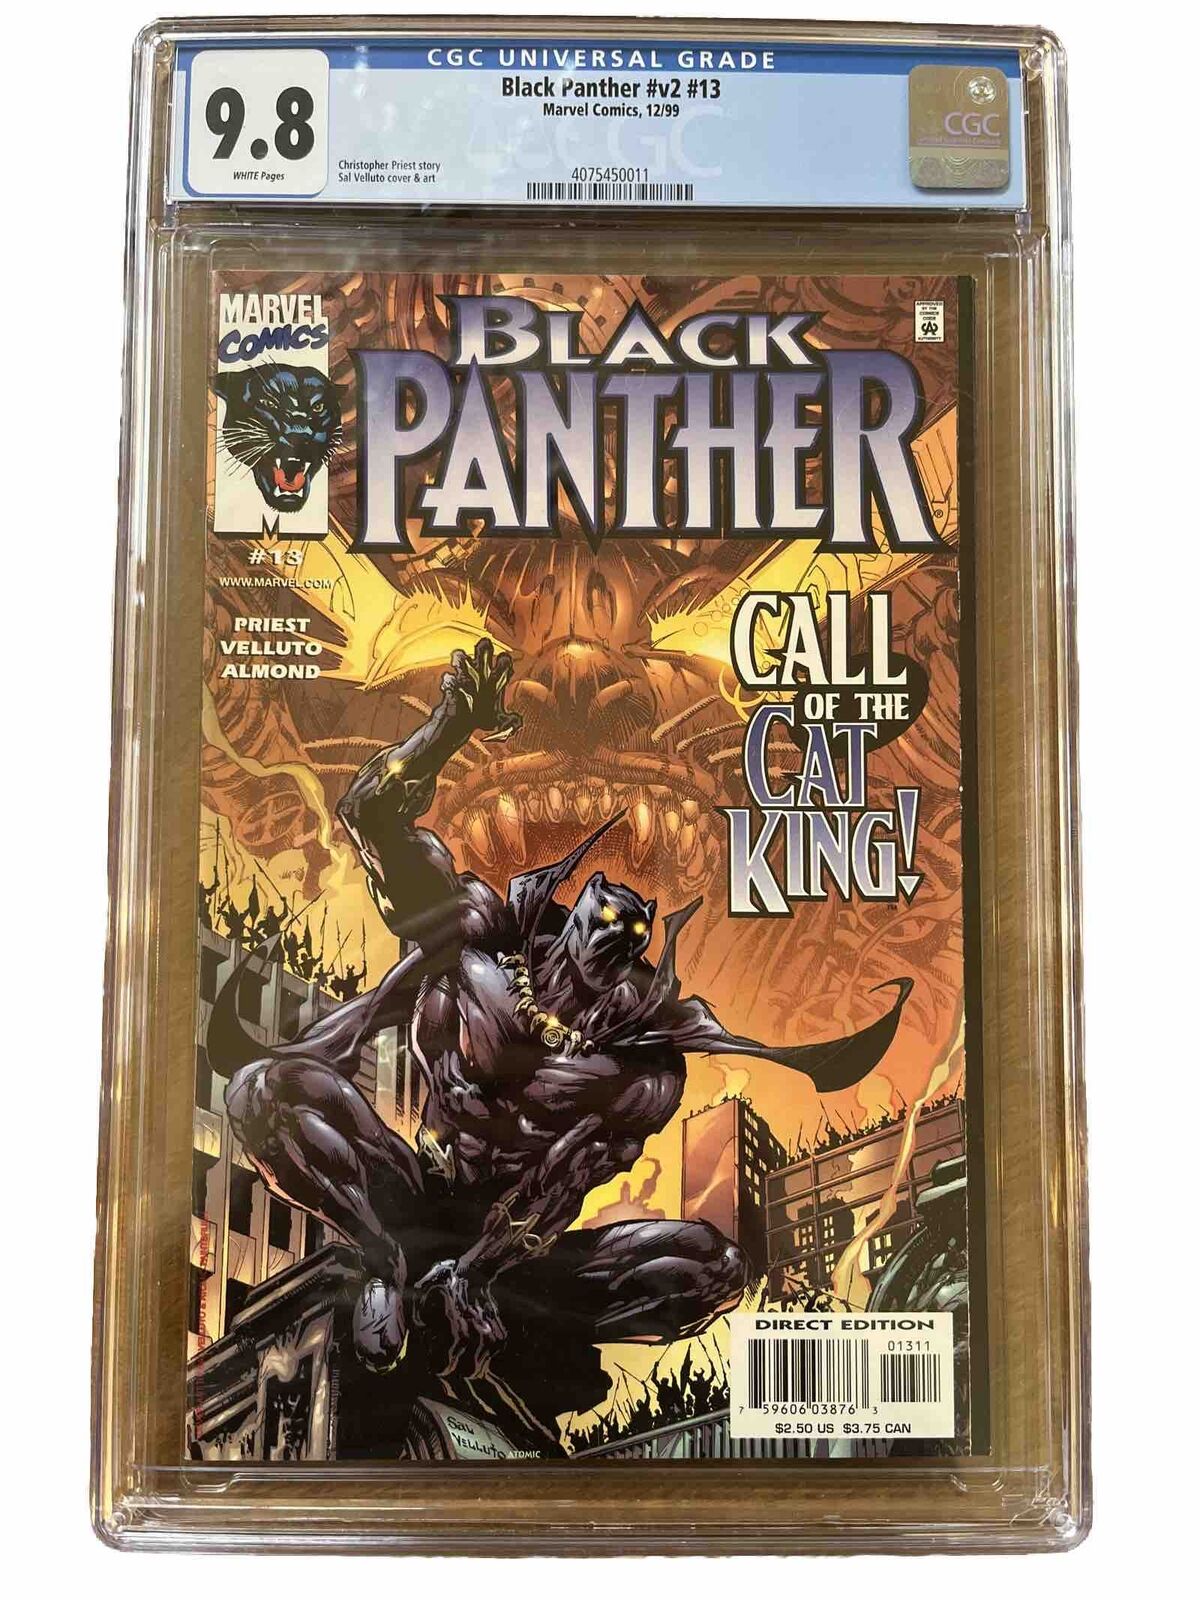 Black Panther #13 (Marvel, December 1999) CGC 9.8.